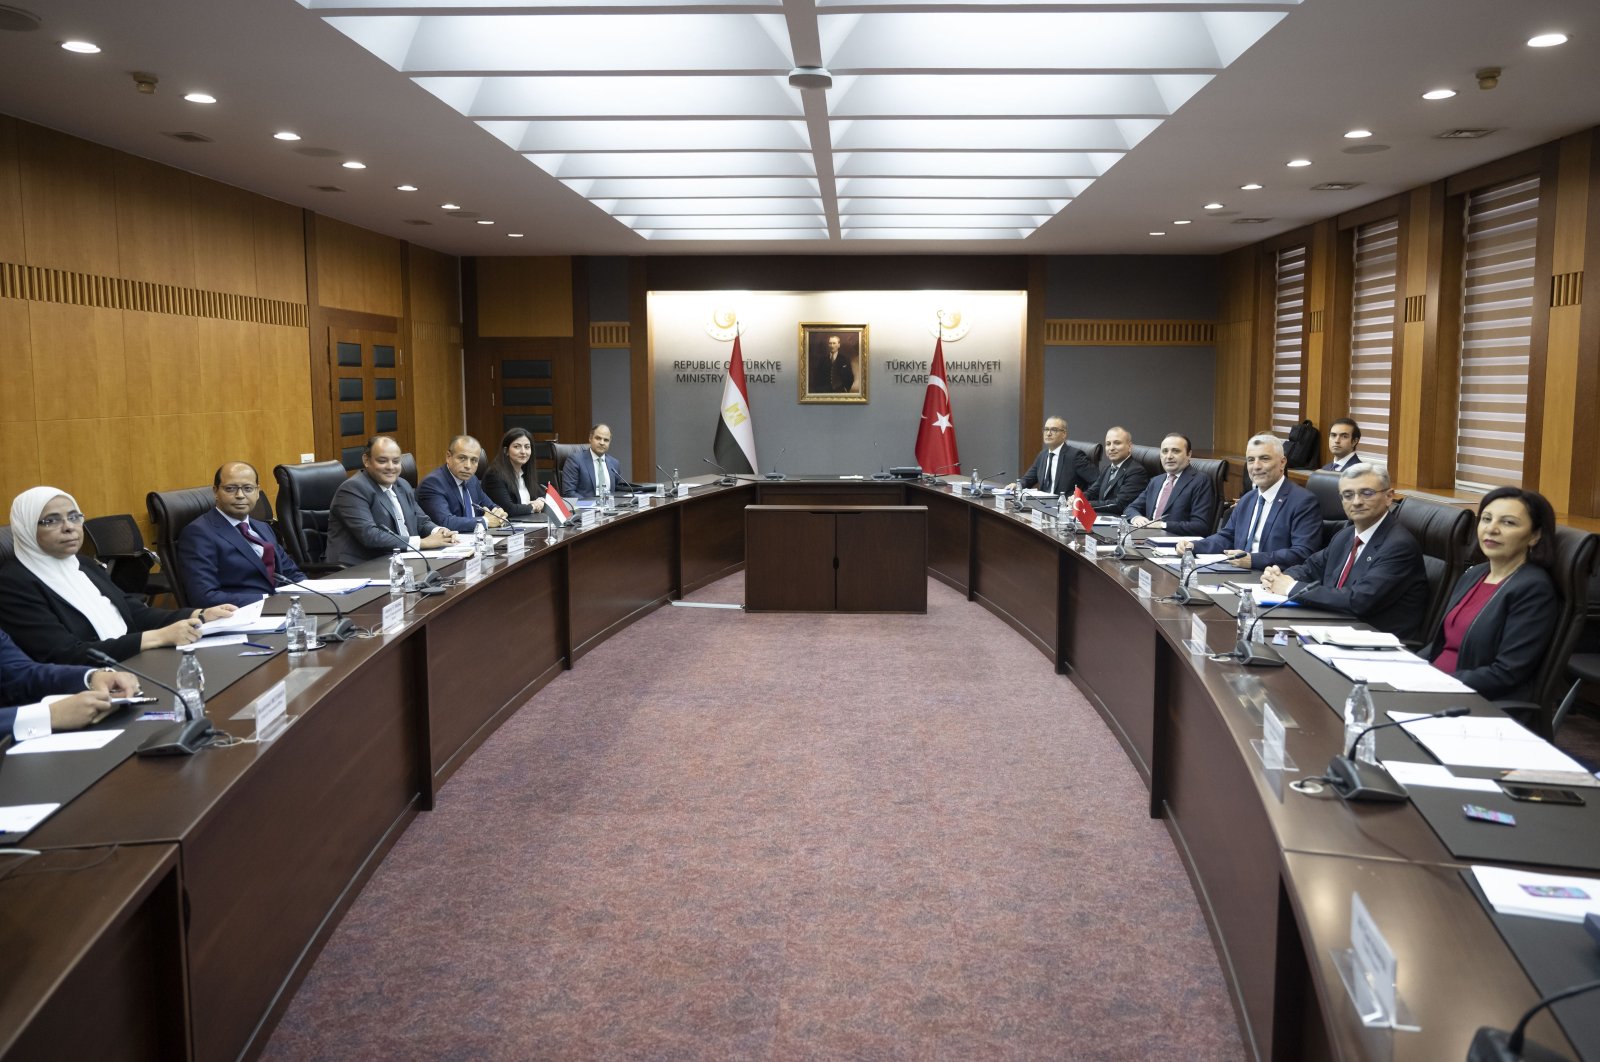 Türkiye, Egypt pitch $15B trade goal as normalization gains pace